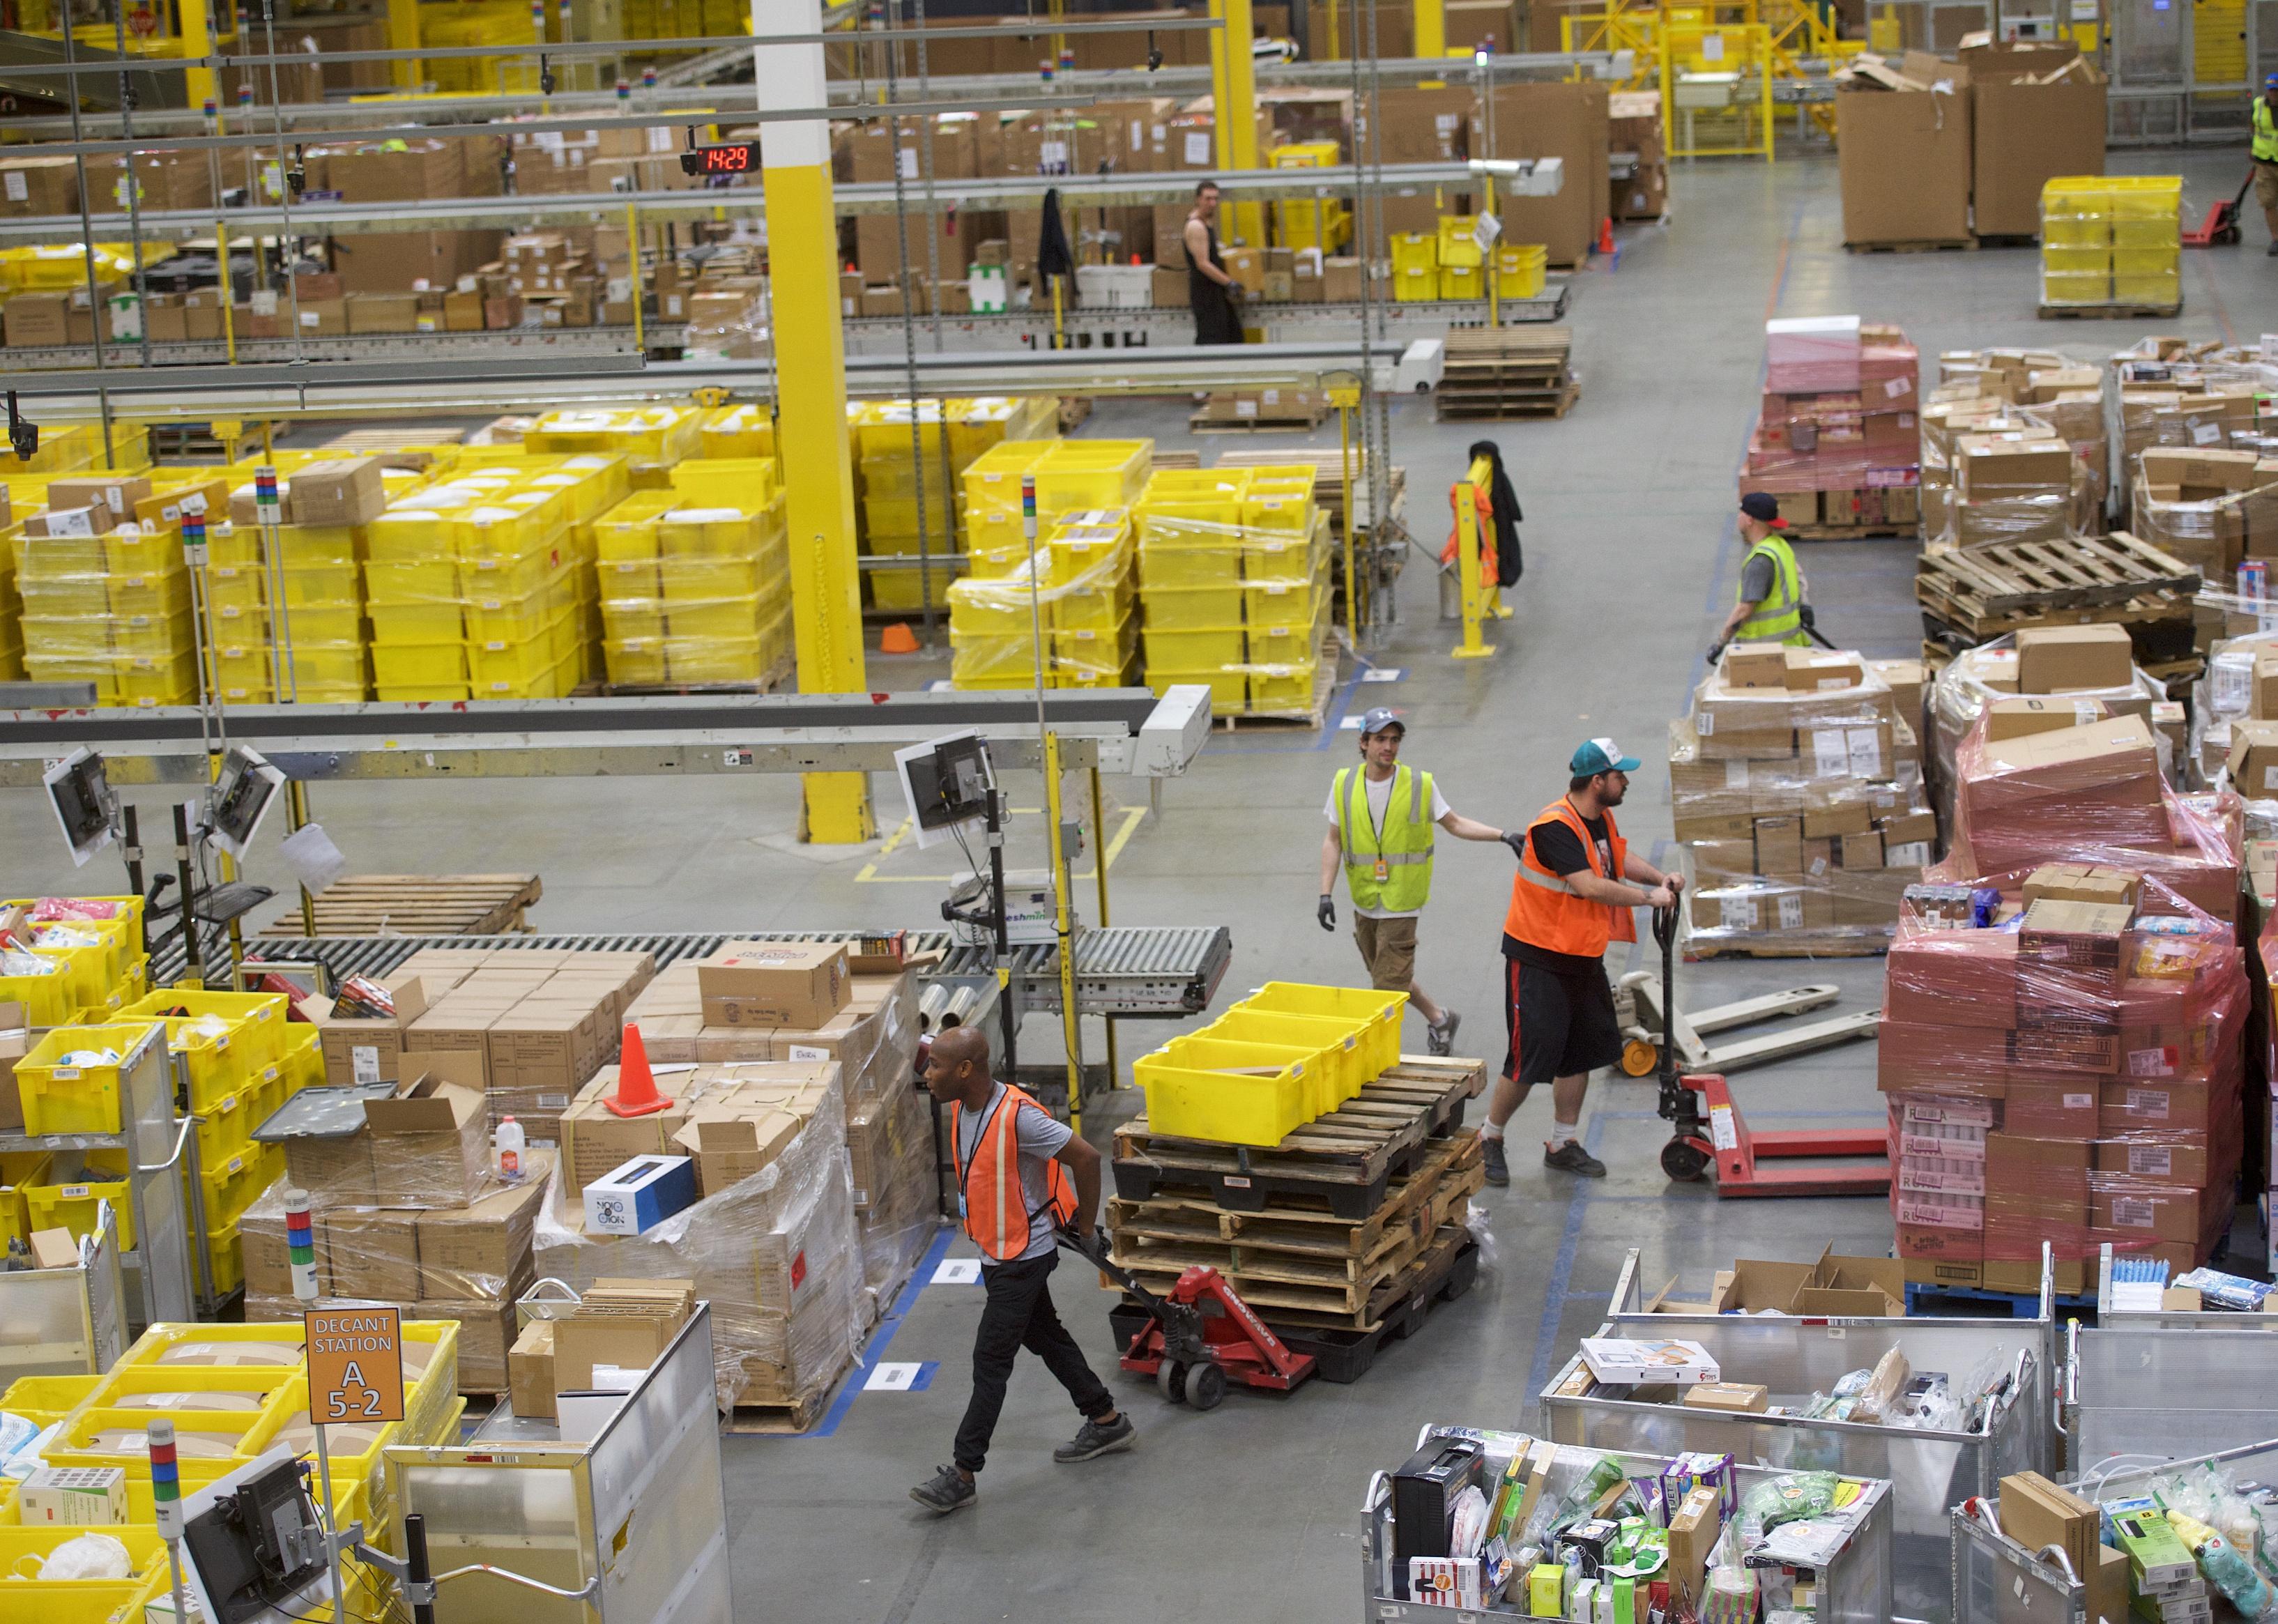 Employees work at an Amazon Fulfillment Center